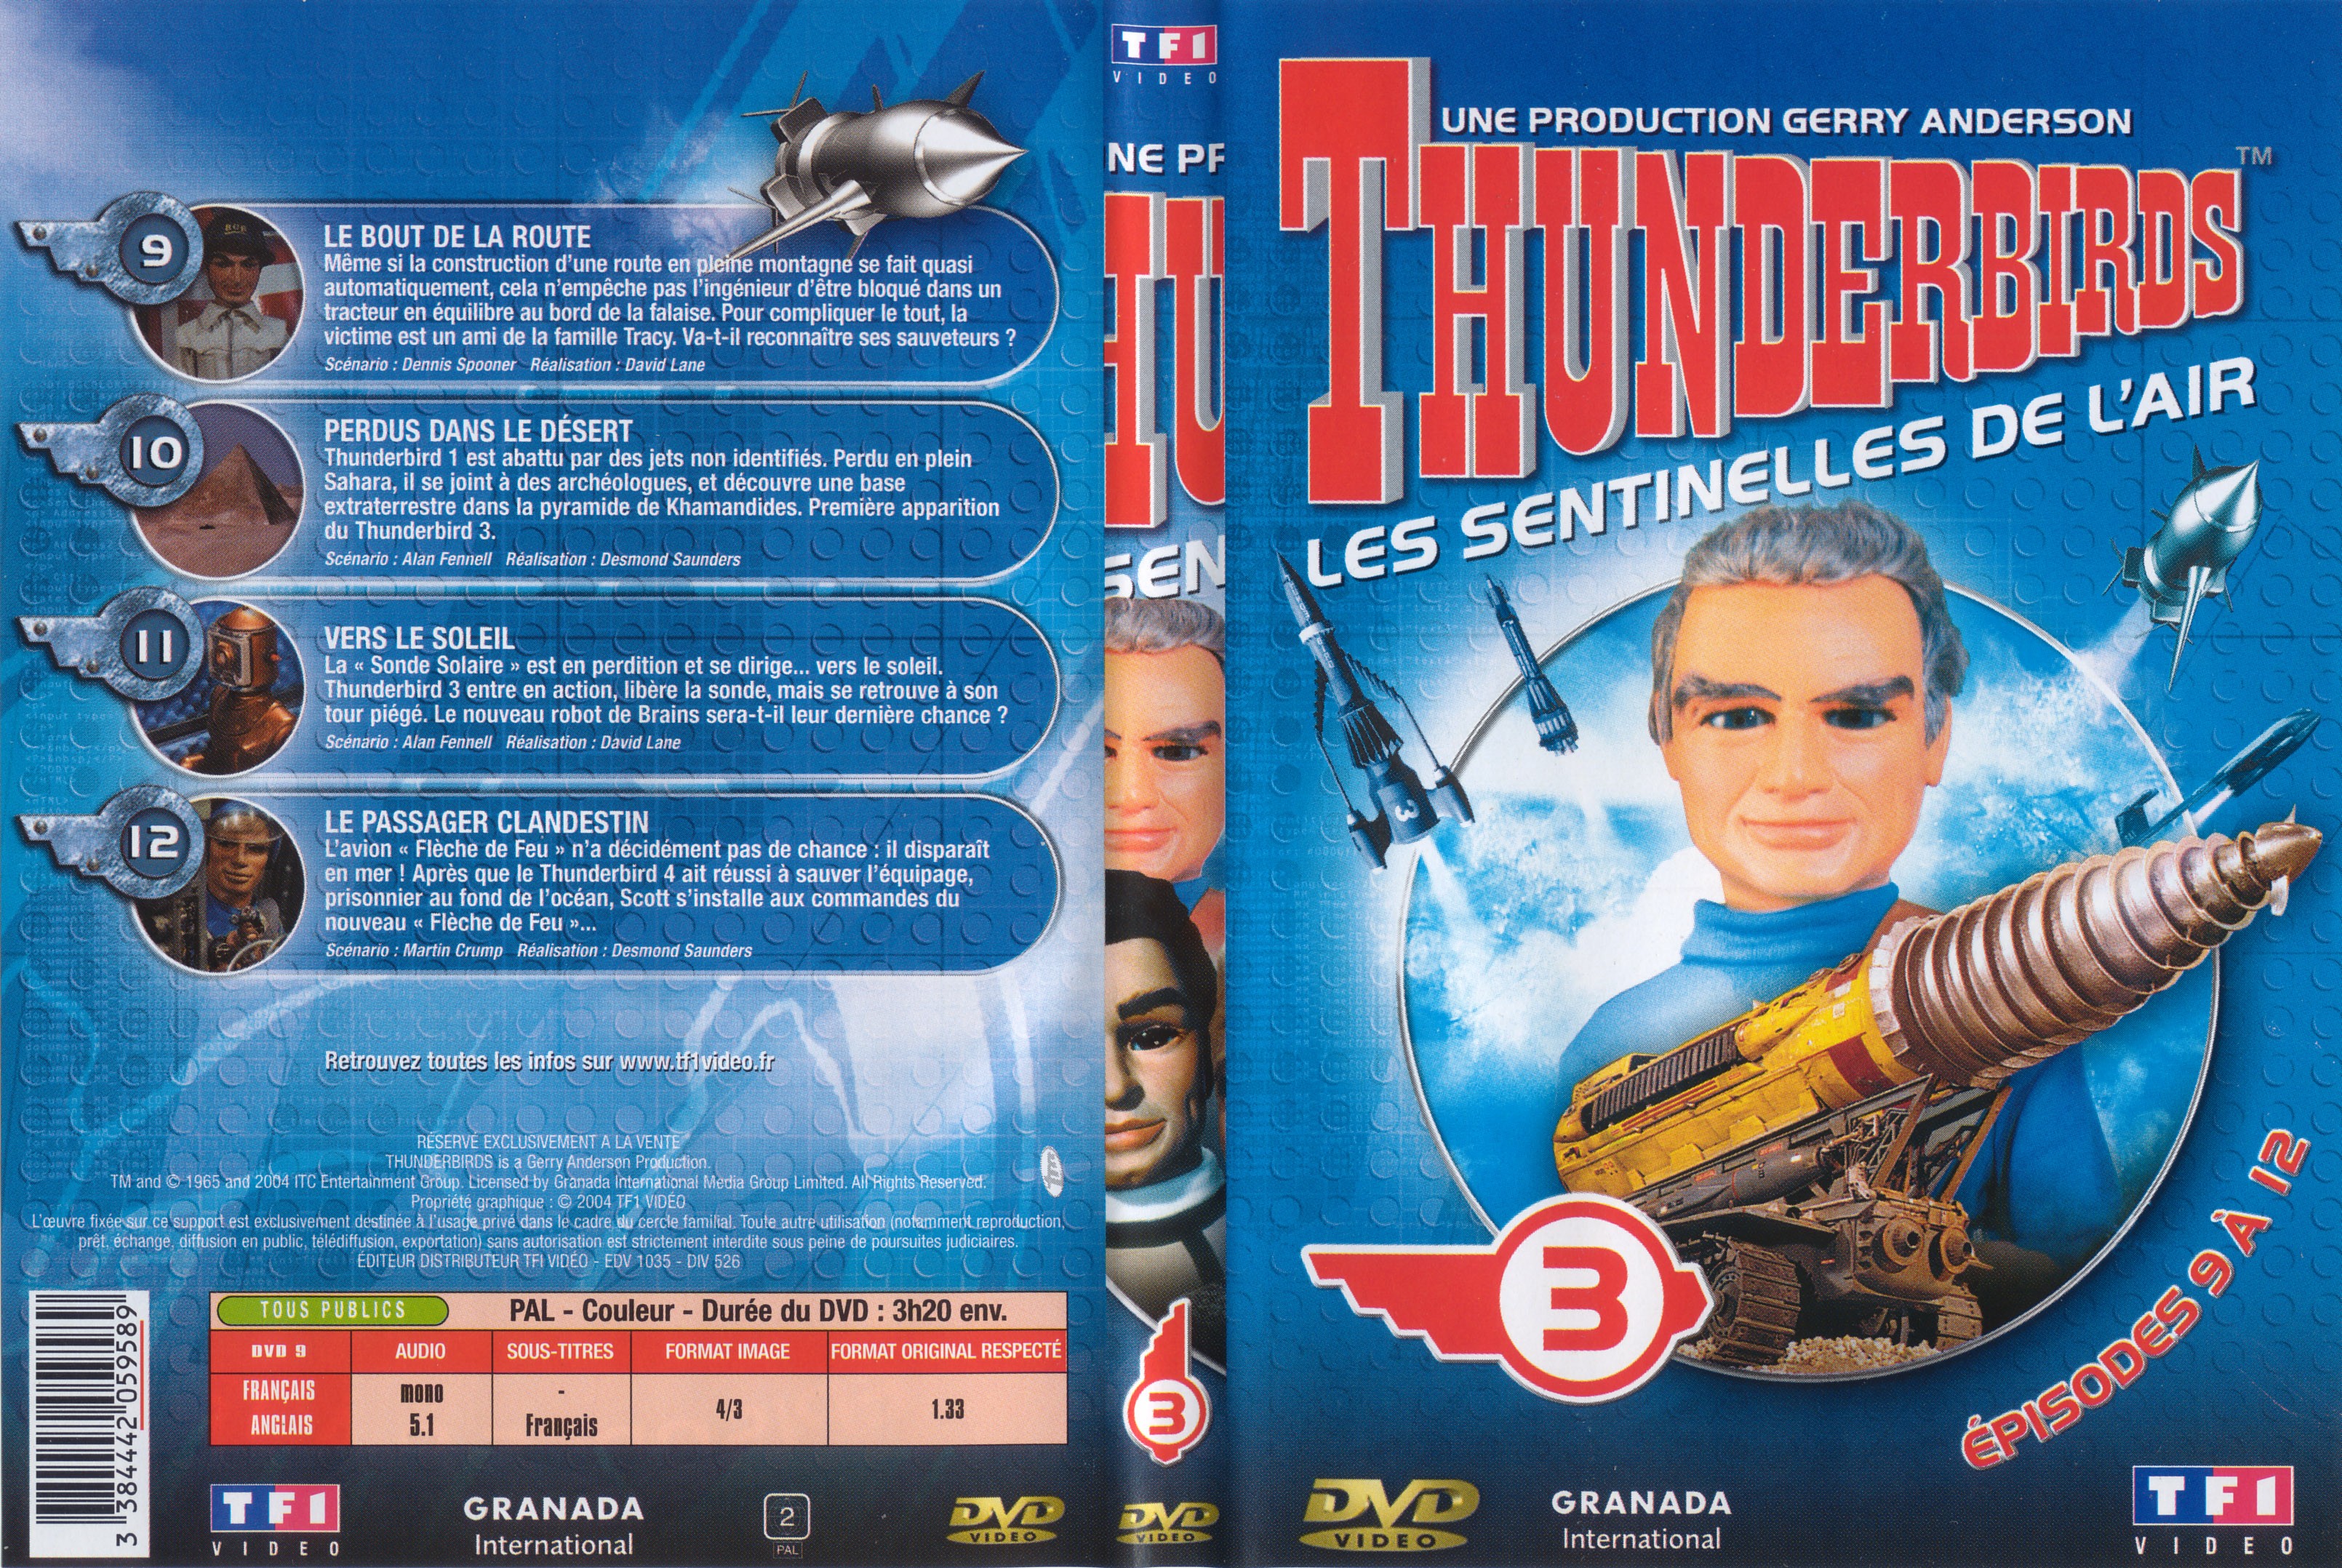 Jaquette DVD Thunderbirds vol 3